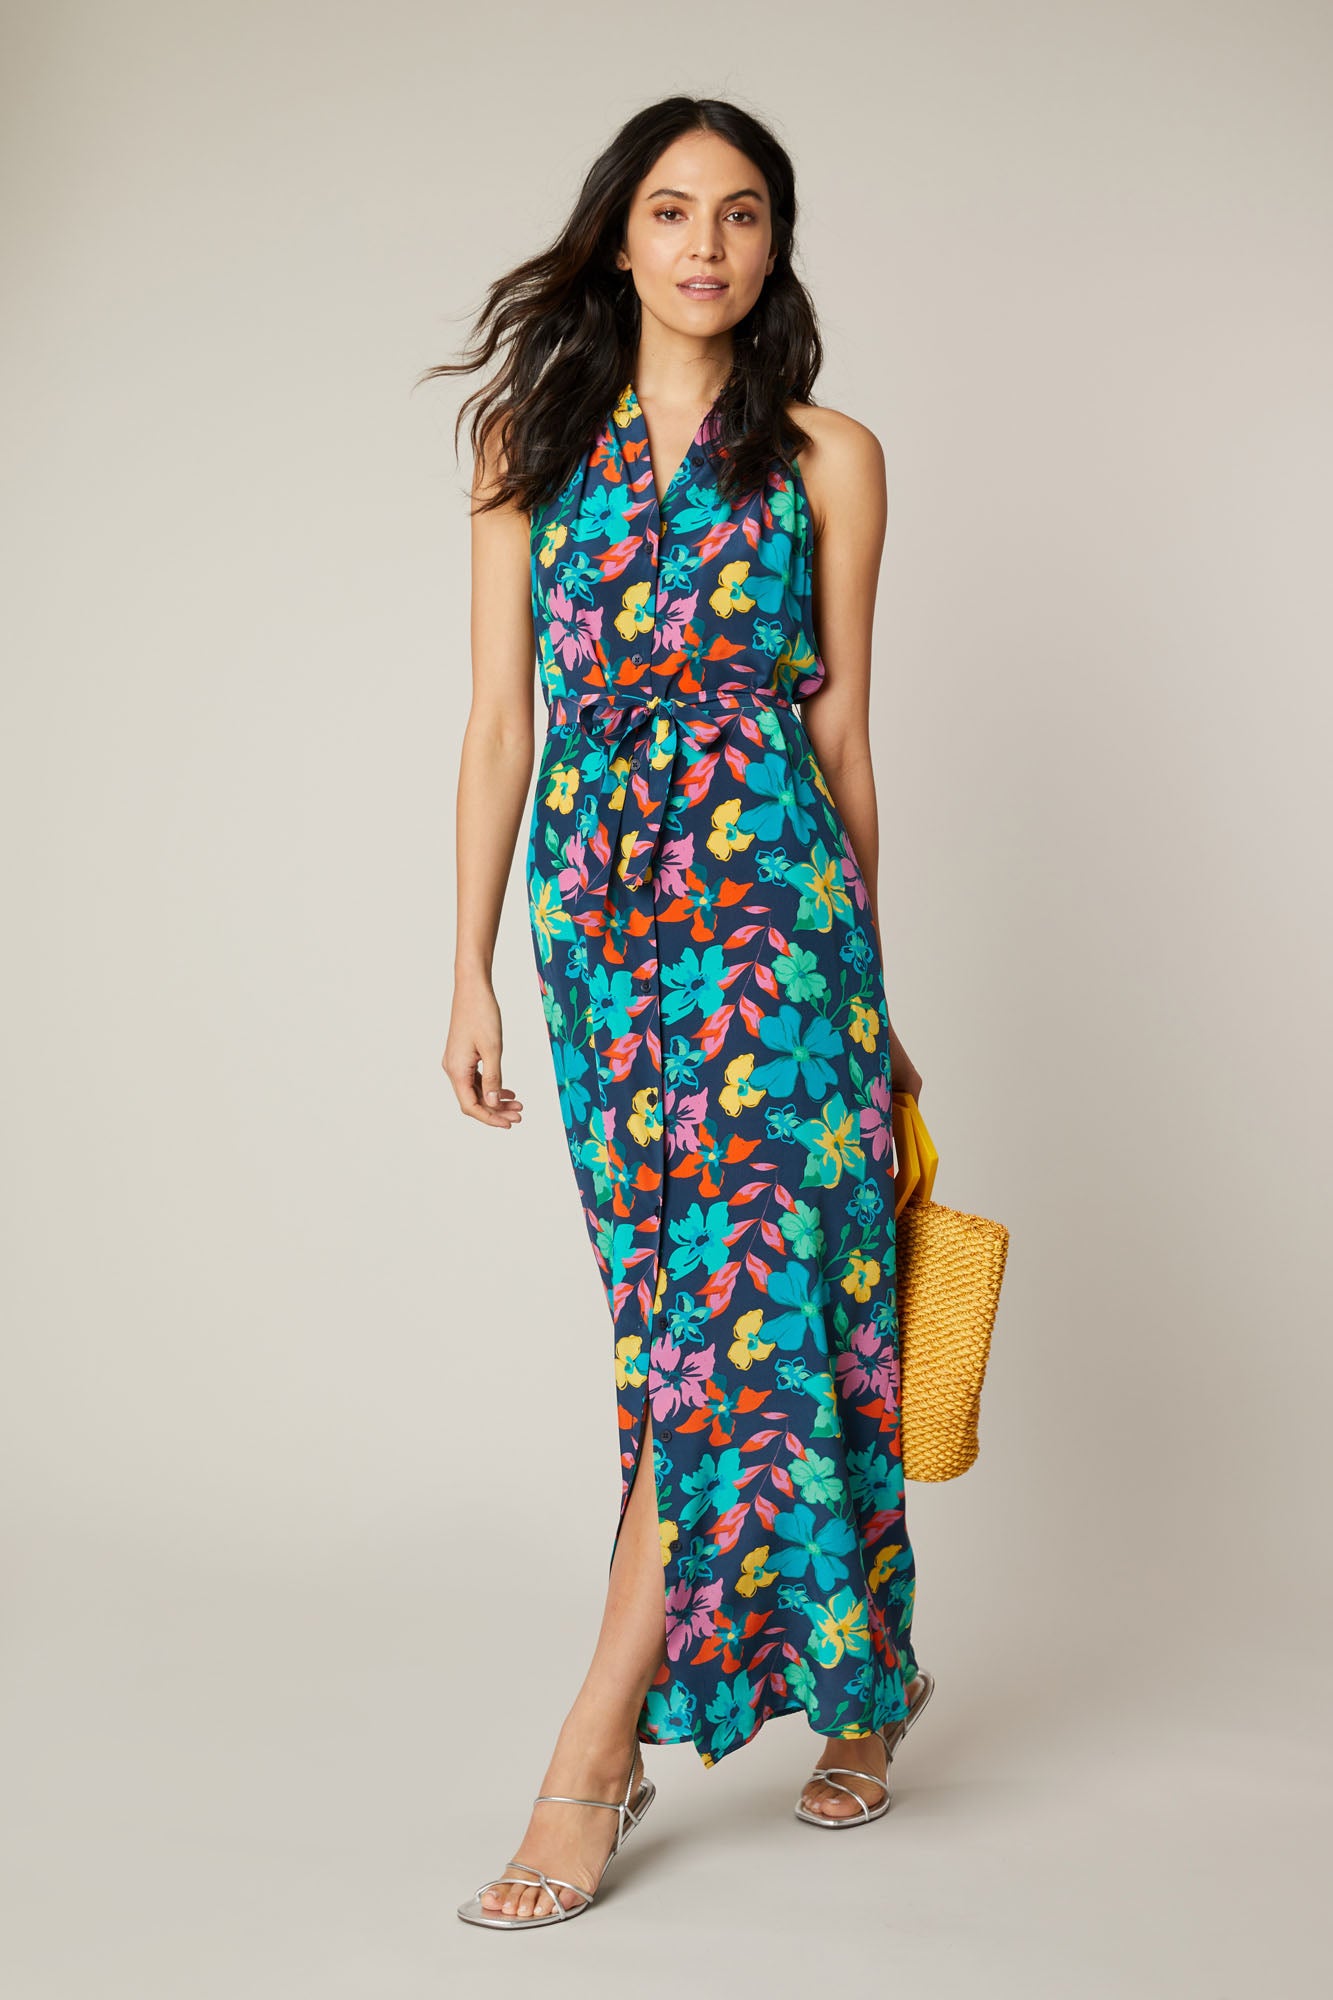 floral sleeveless maxi dress